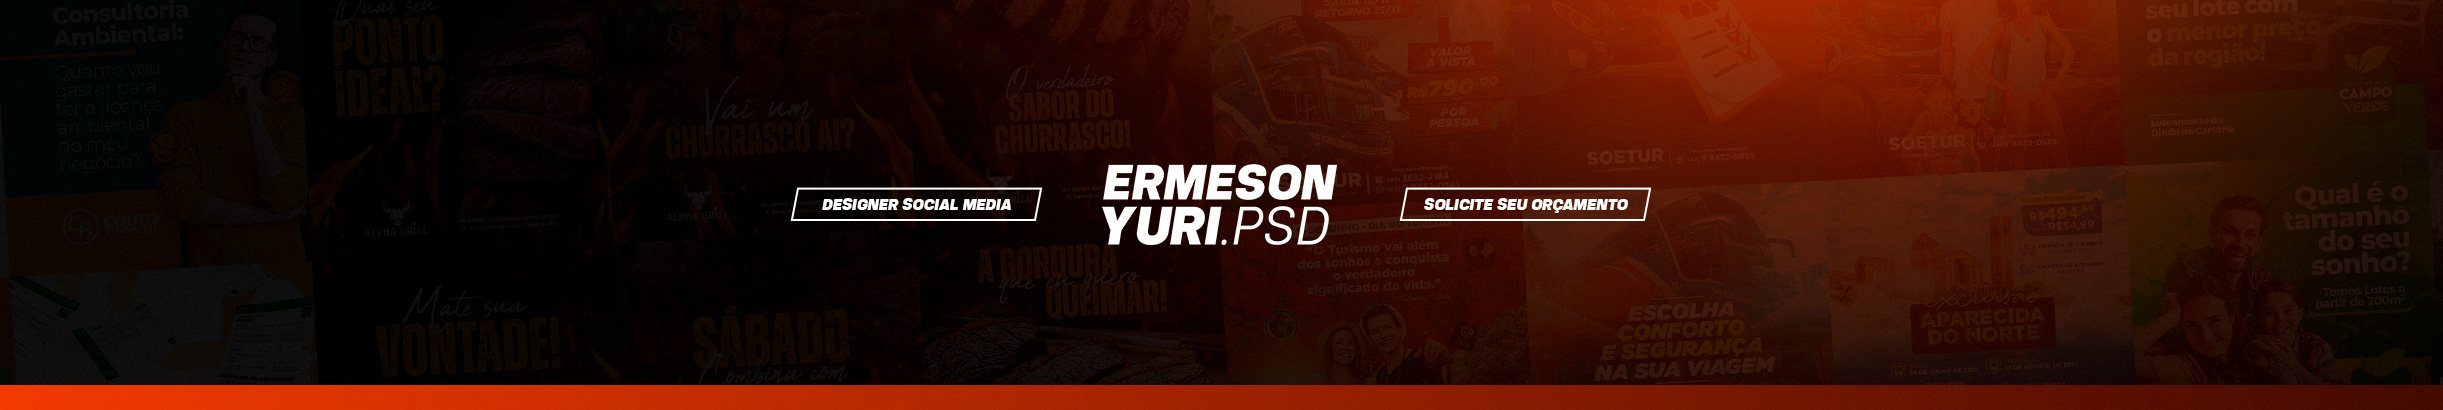 Ermeson Yuri's profile banner